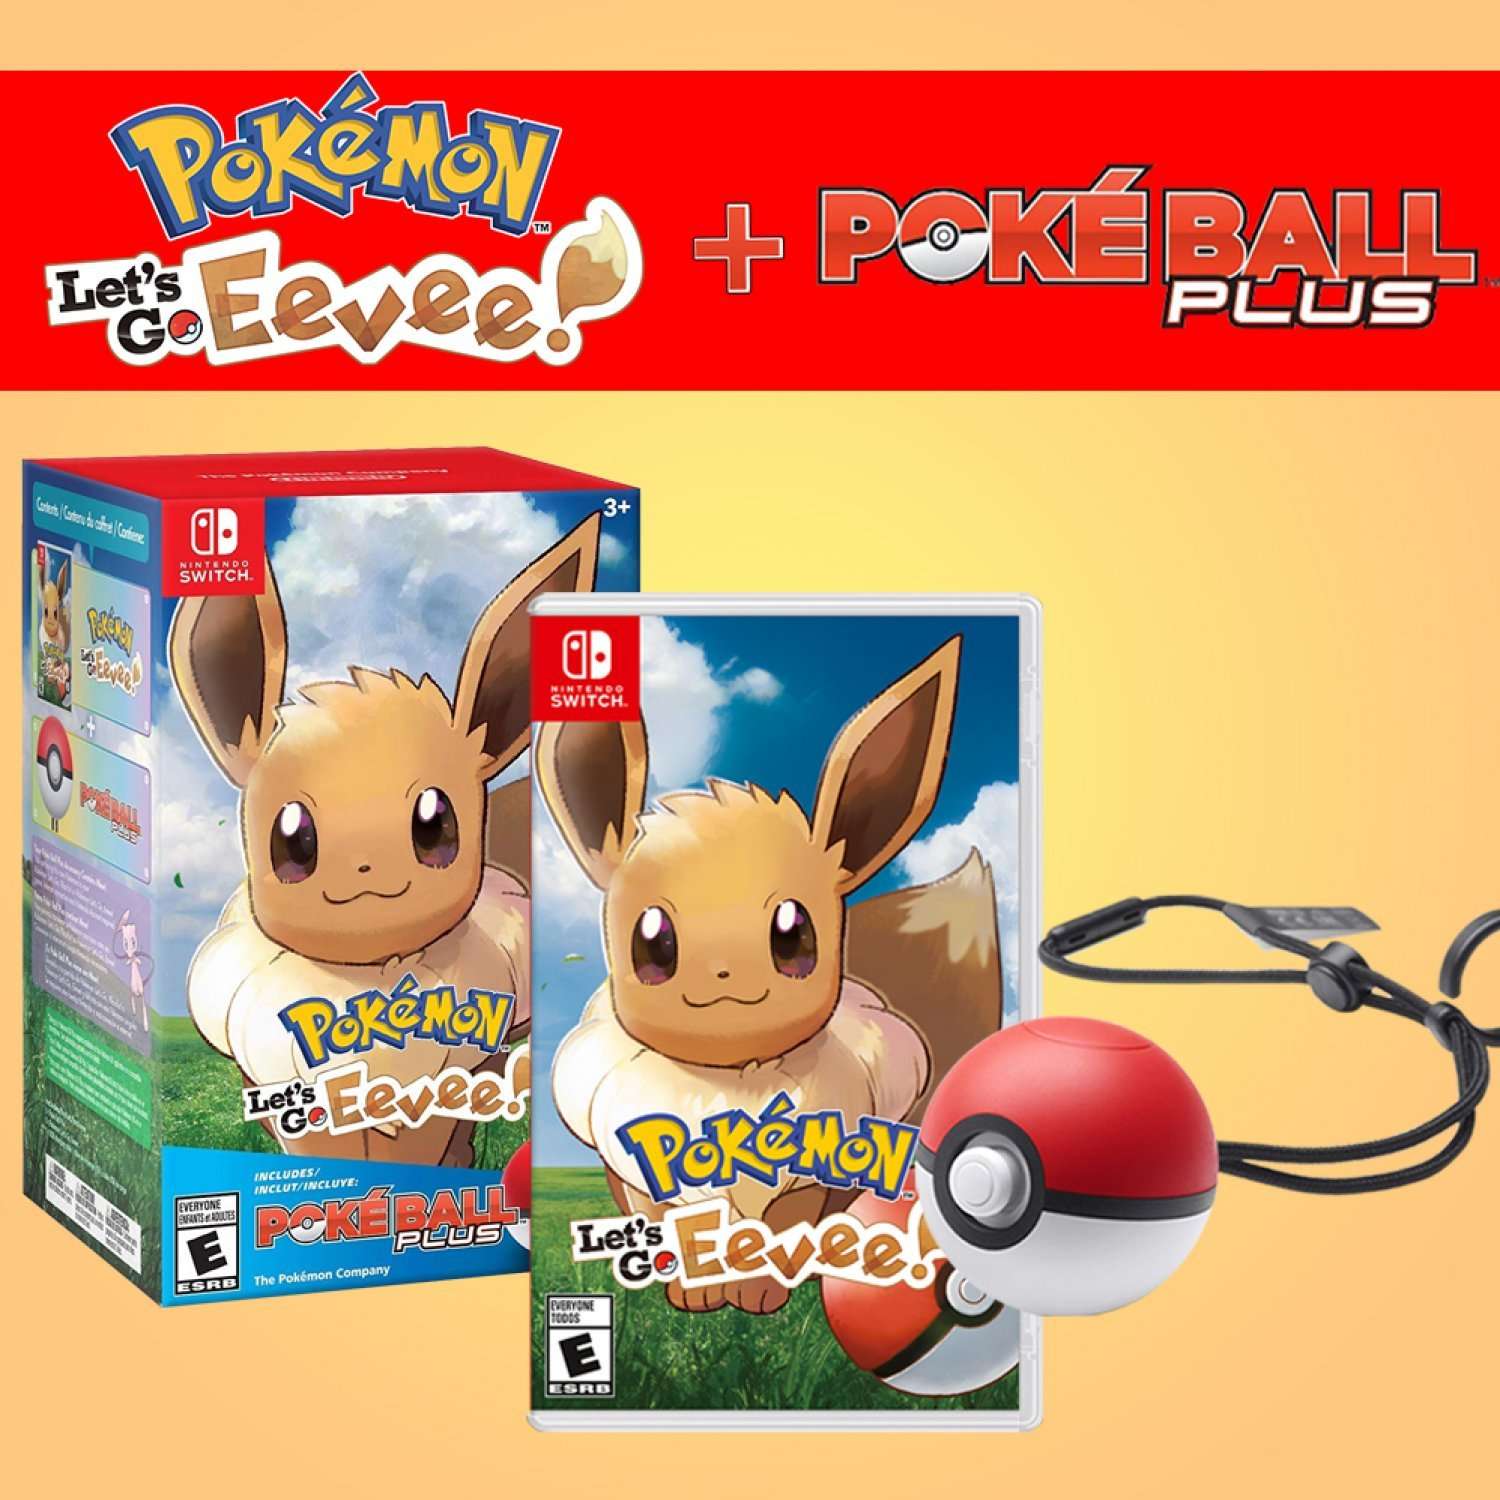 Pokemon Images: Nintendo Switch Pokemon Lets Go Eevee Poke Ball Plus Pack